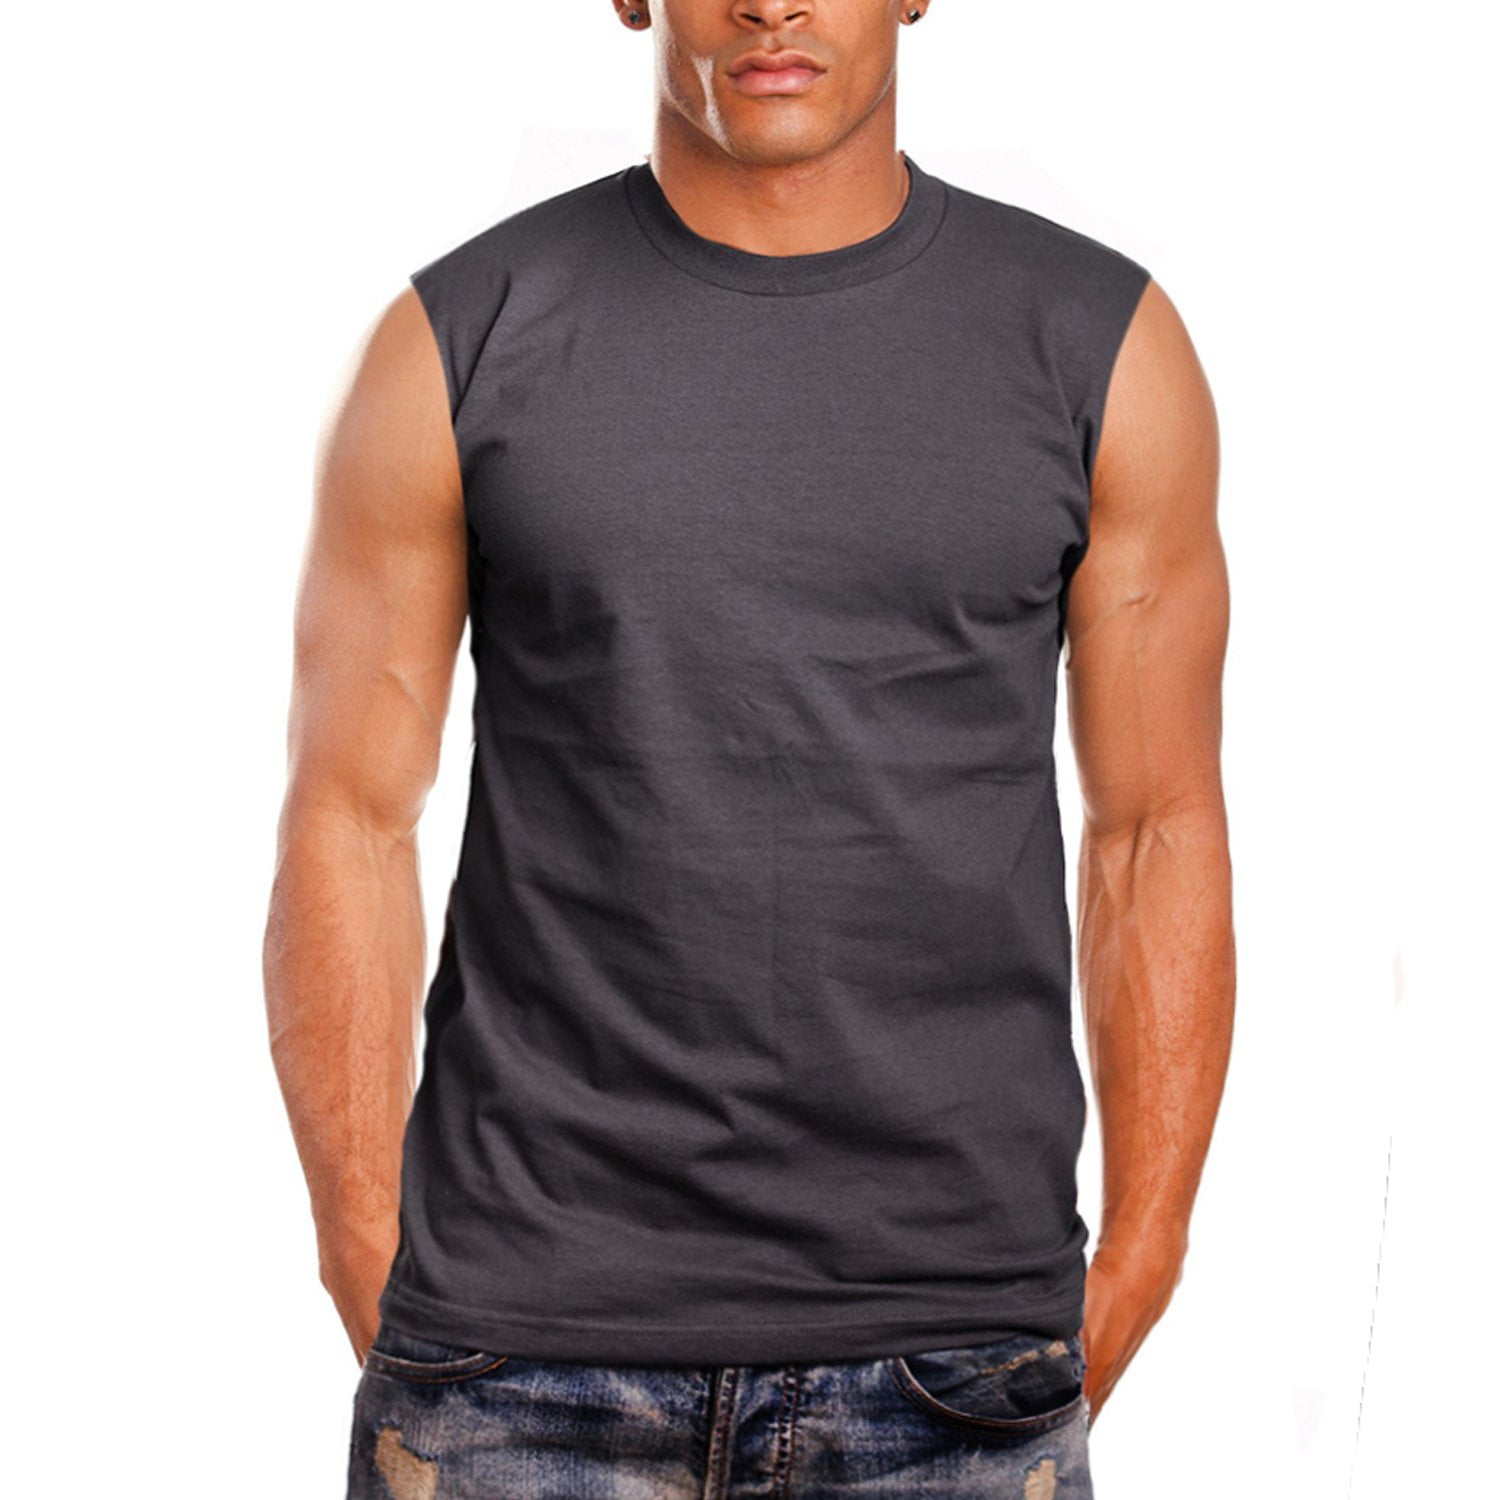 Uni Clau Mens Sleeveless T Shirts Muscle Workout Gym Cotton Tank Top Tee Shirts